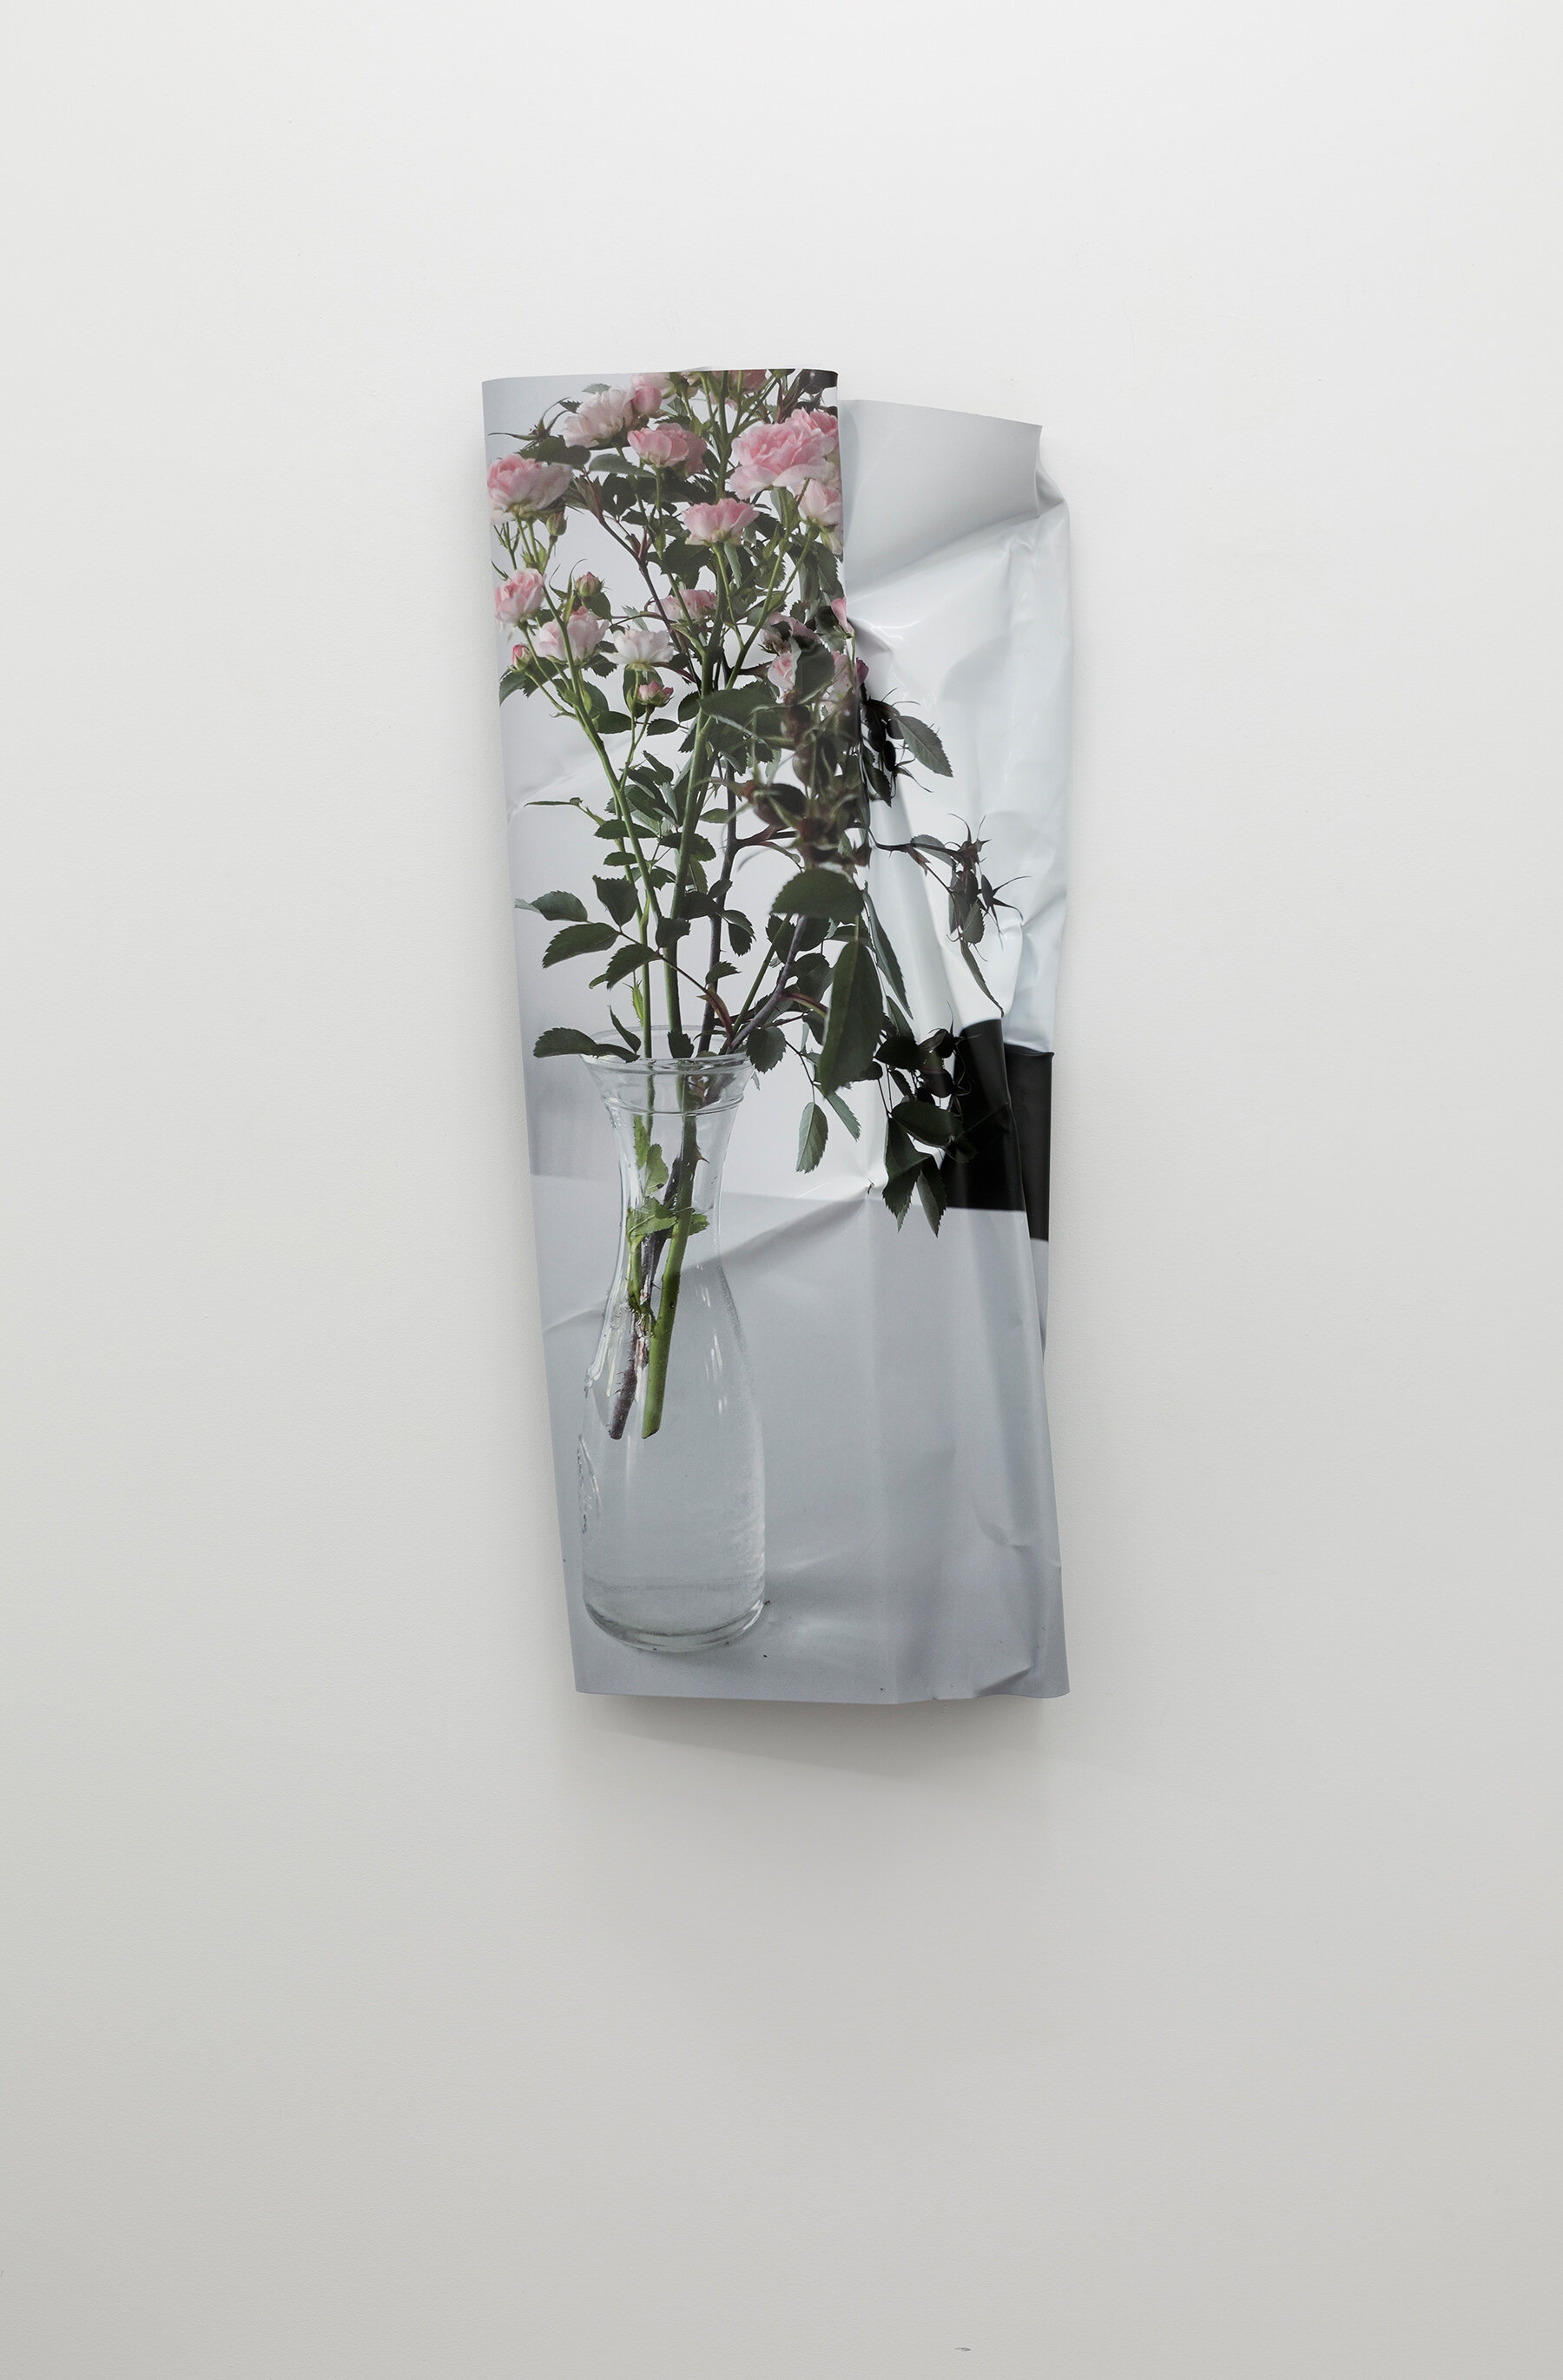  Olaf Metzel: “Tafelrunde”, 2021, Exhibition views, Galerie Parisa Kind, Frankfurt am Main 